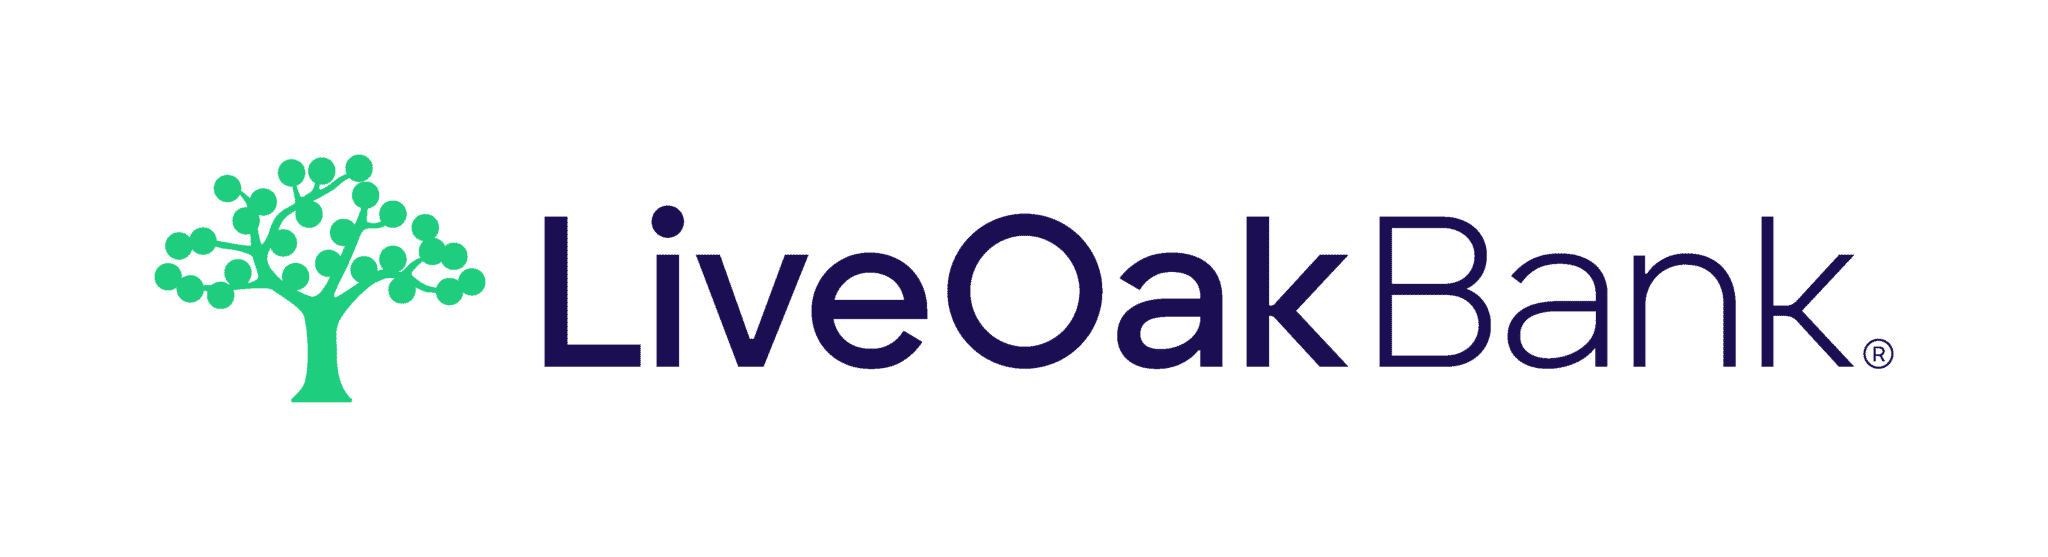 Live Oak Bank 1-Year Business CD